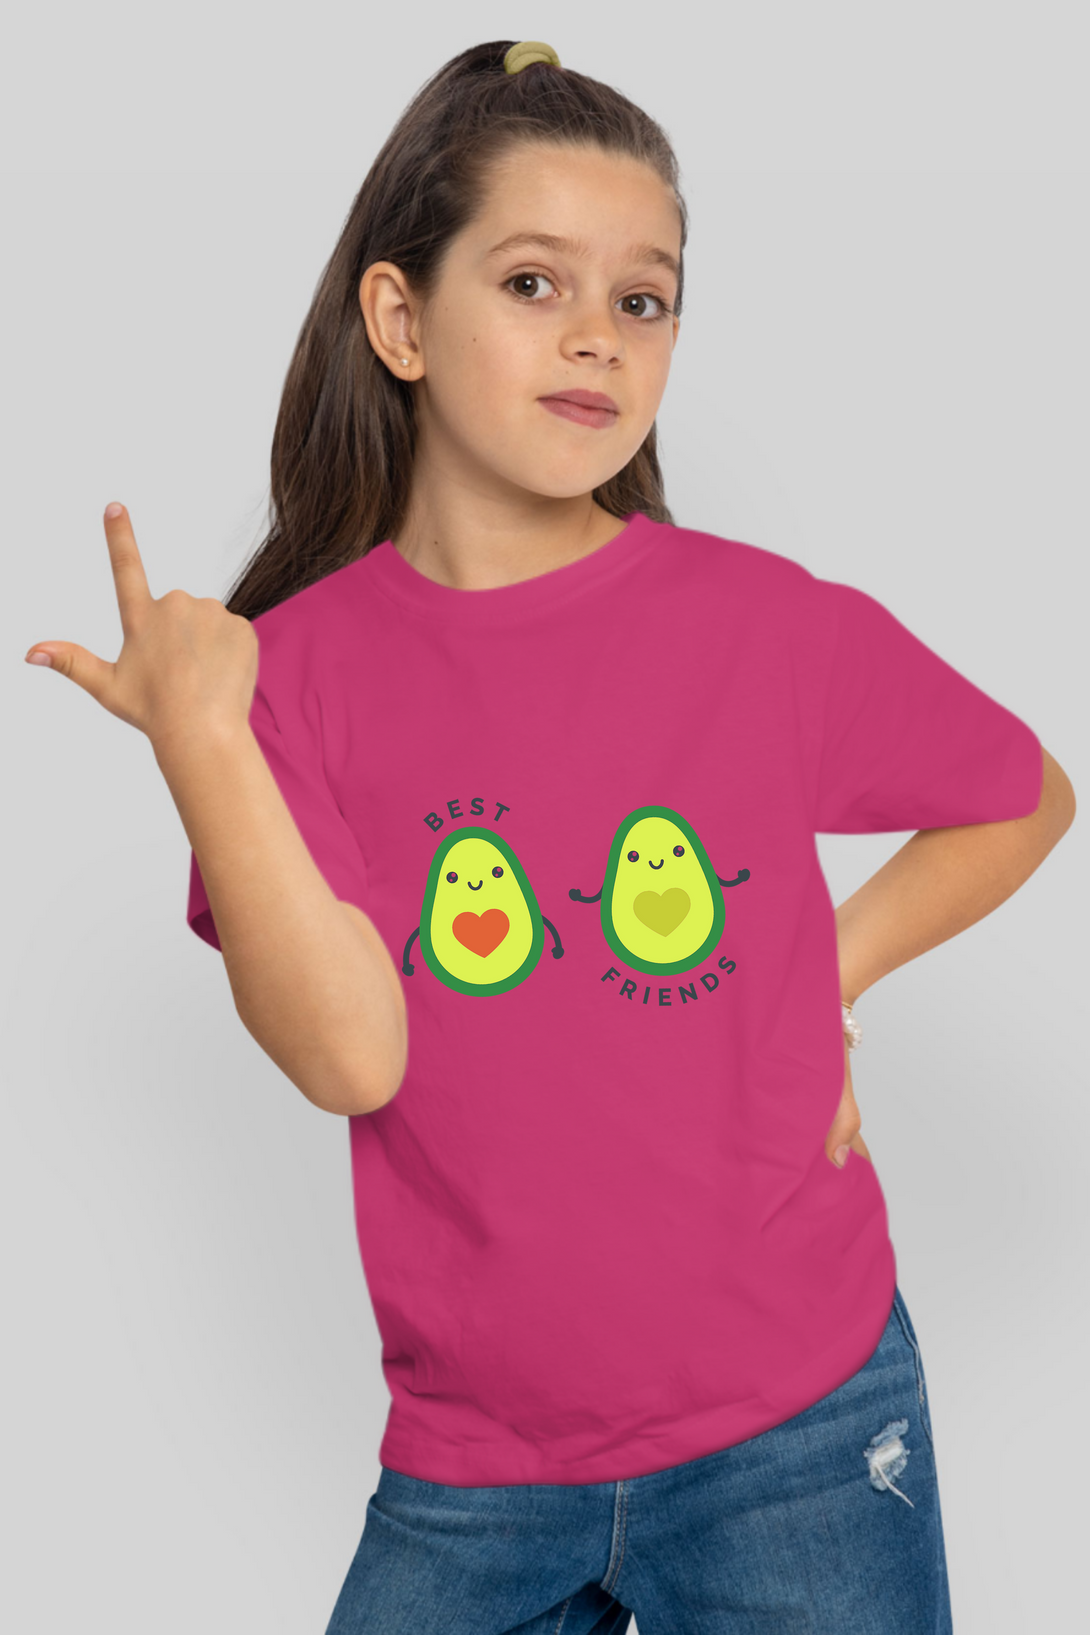 Avocado Friends Printed T-Shirt For Girl - WowWaves - 5